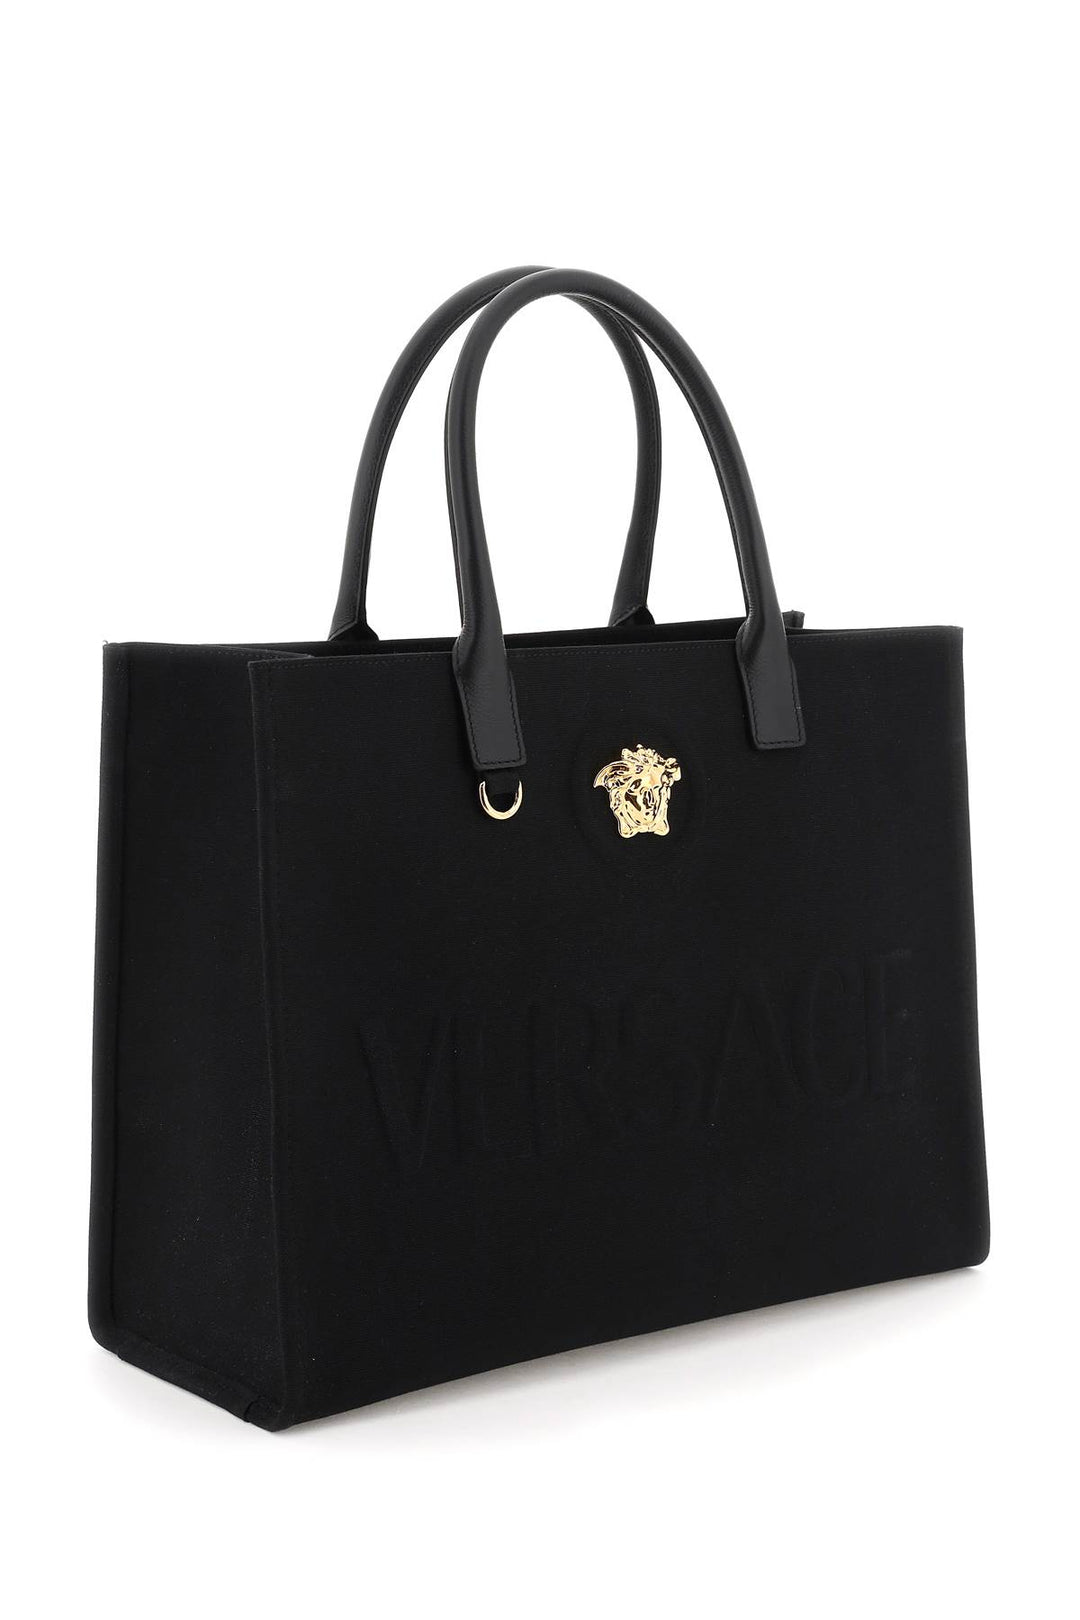 Versace La Medusa Tote Bag   Black